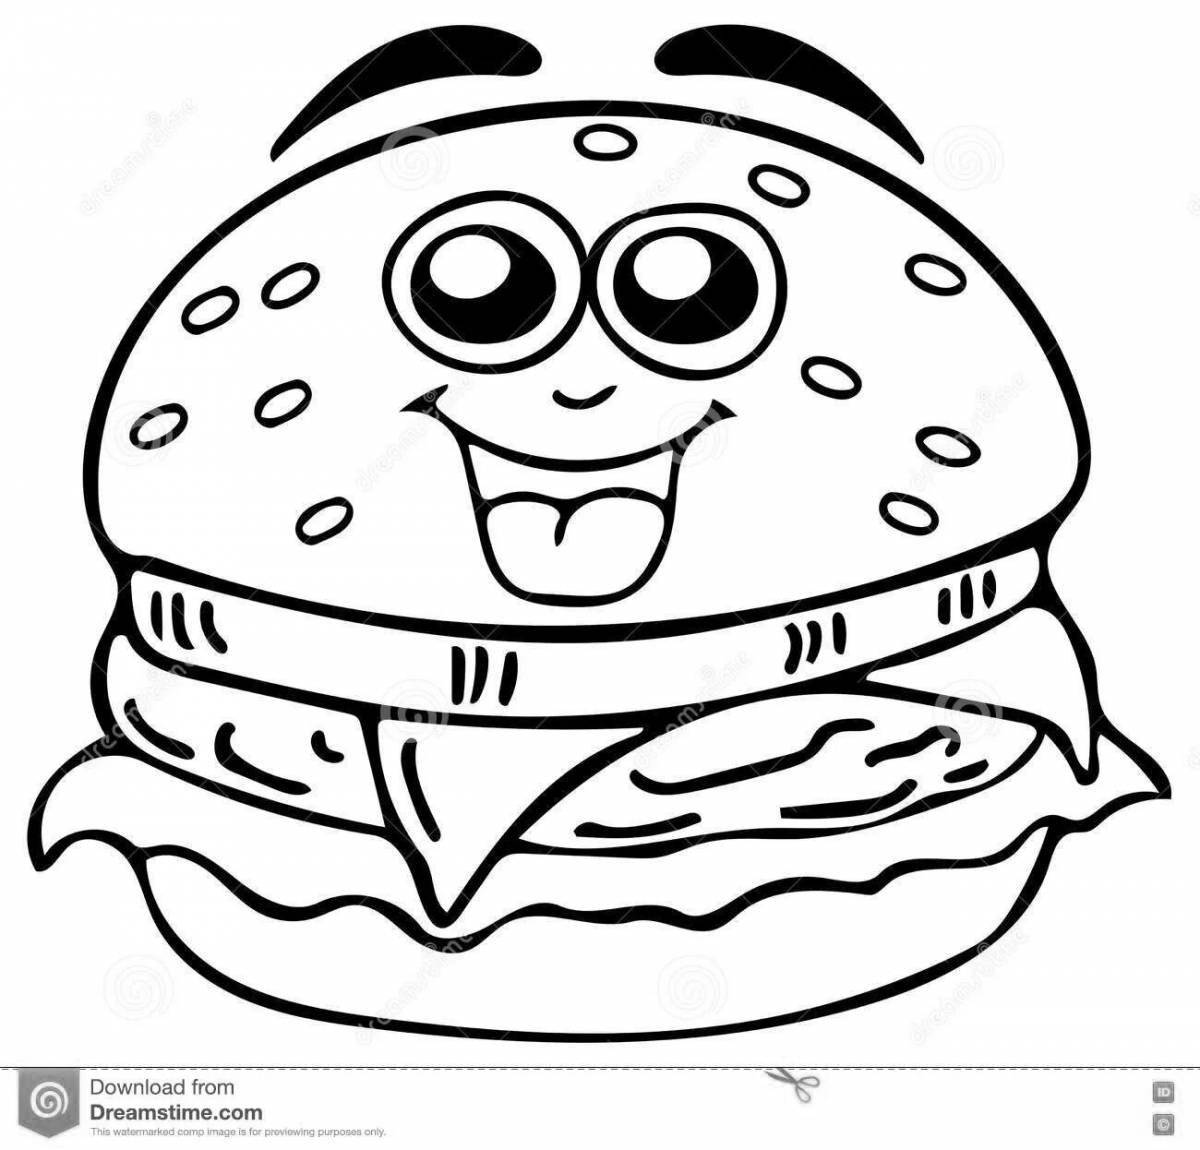 Coloring page funny boxy boo burger